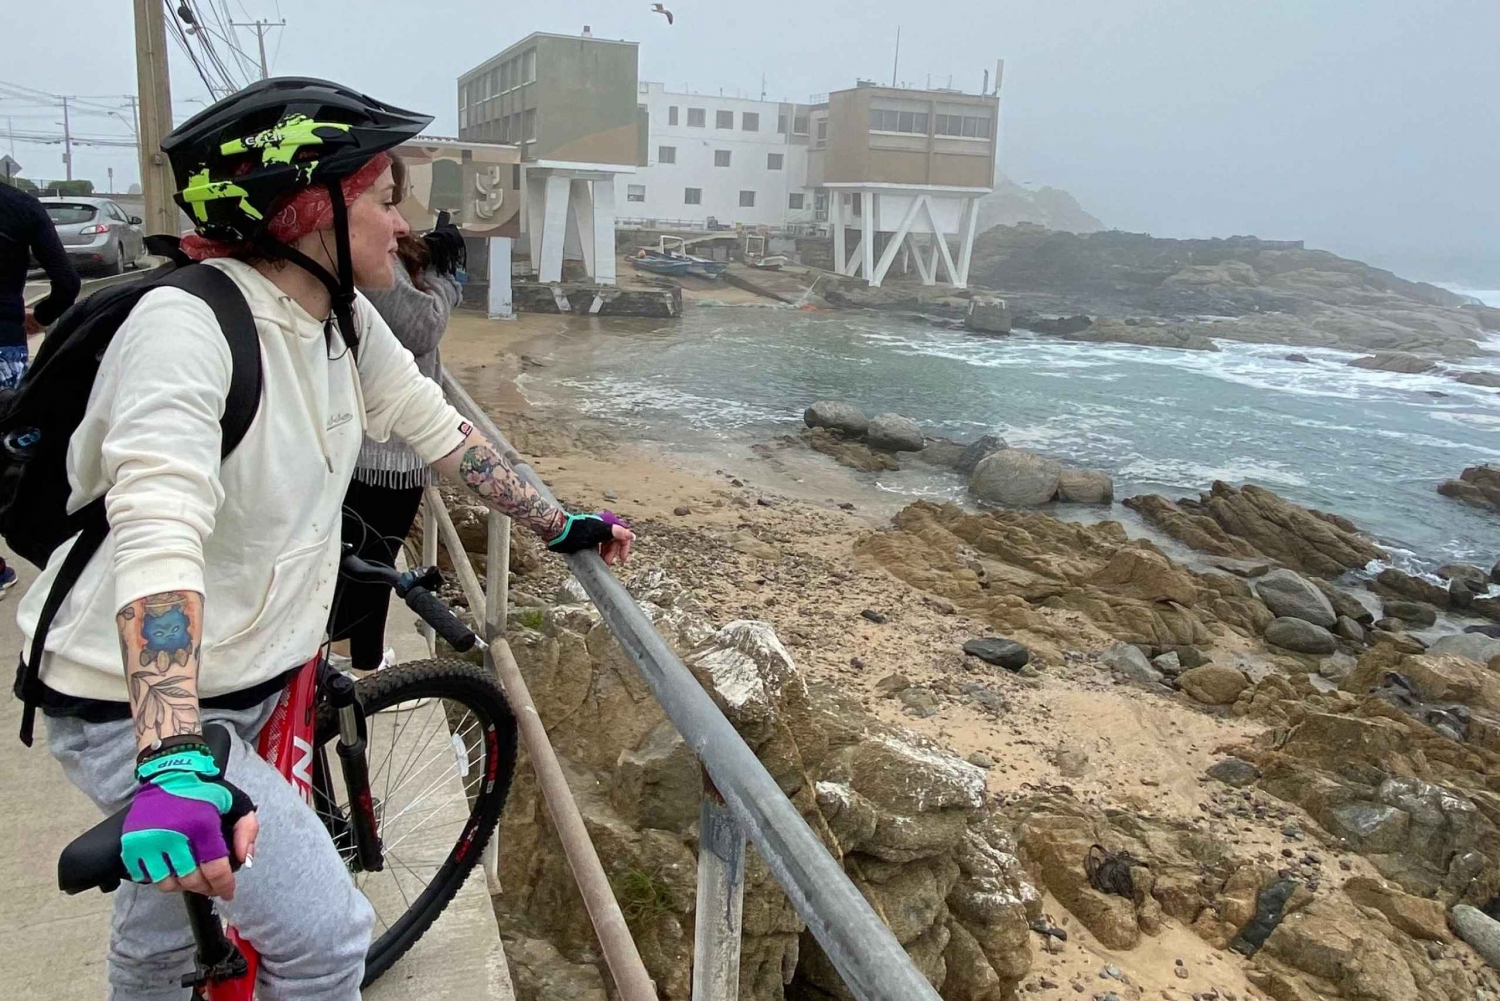 Viña del Mar: Fahrradtour an der Küste